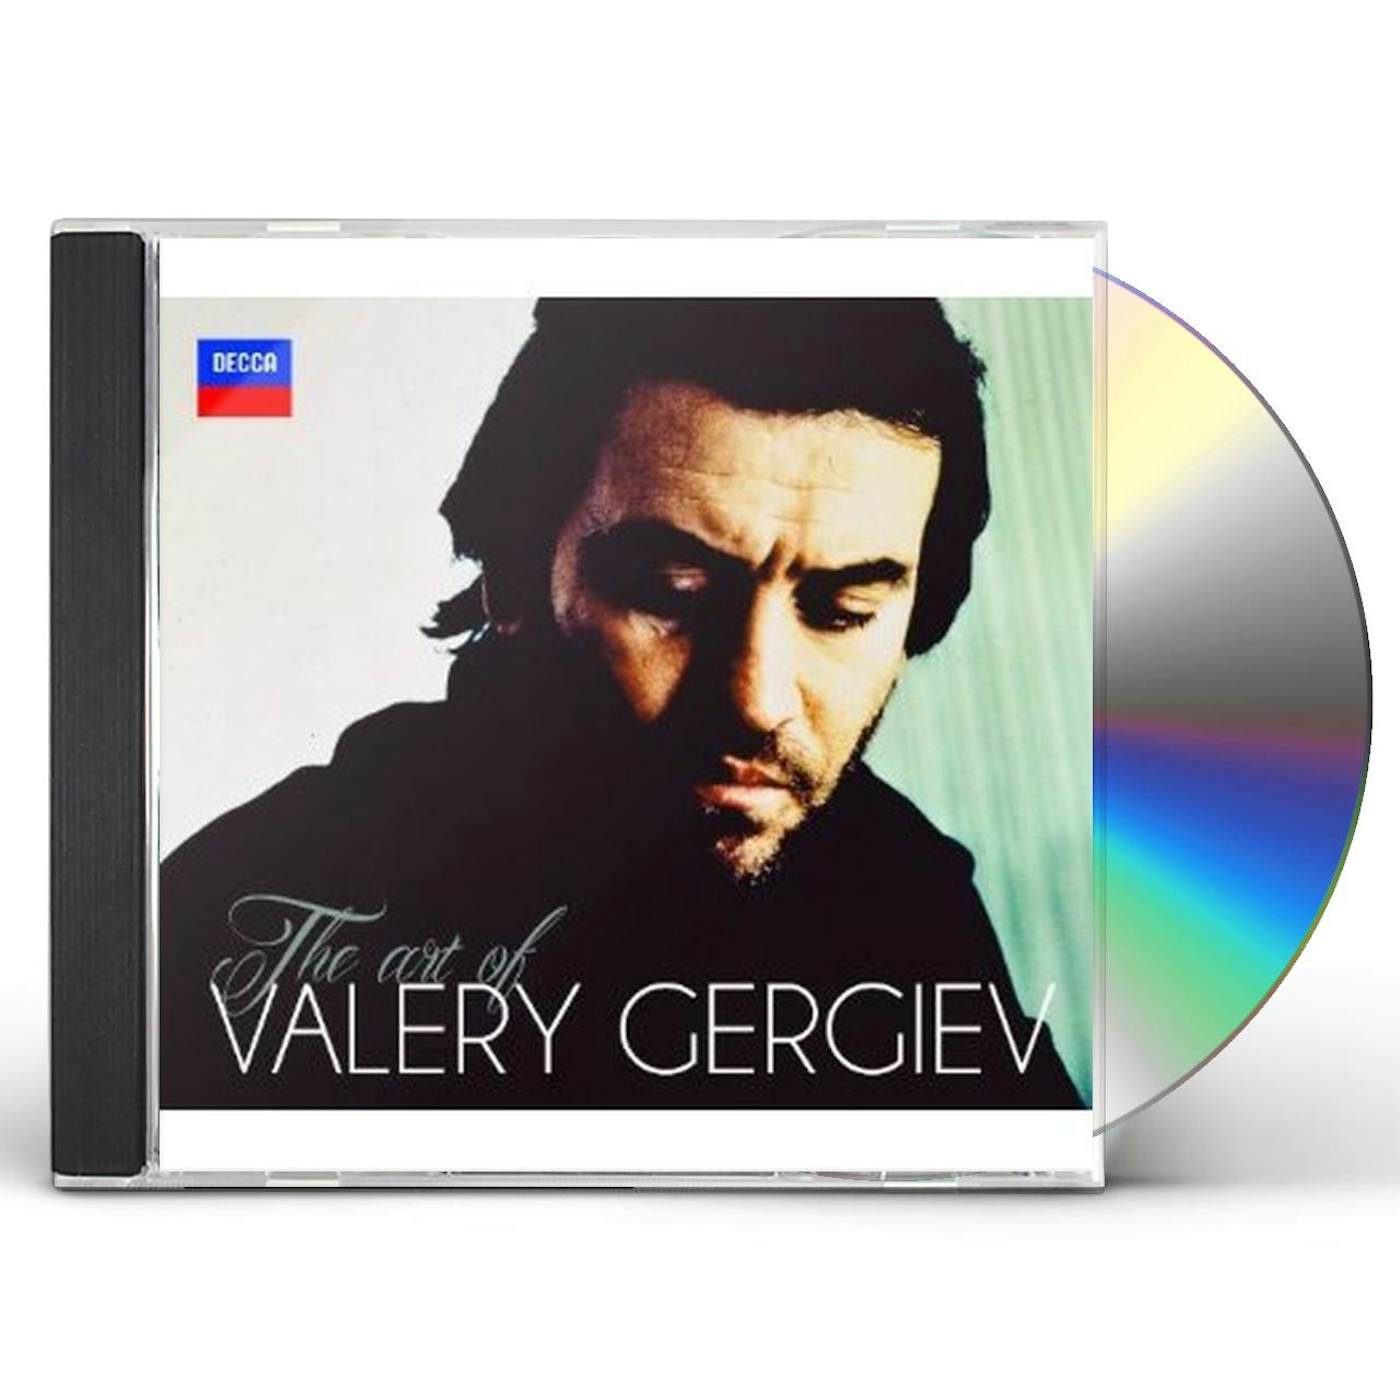 ART OF VALERY GERGIEV CD